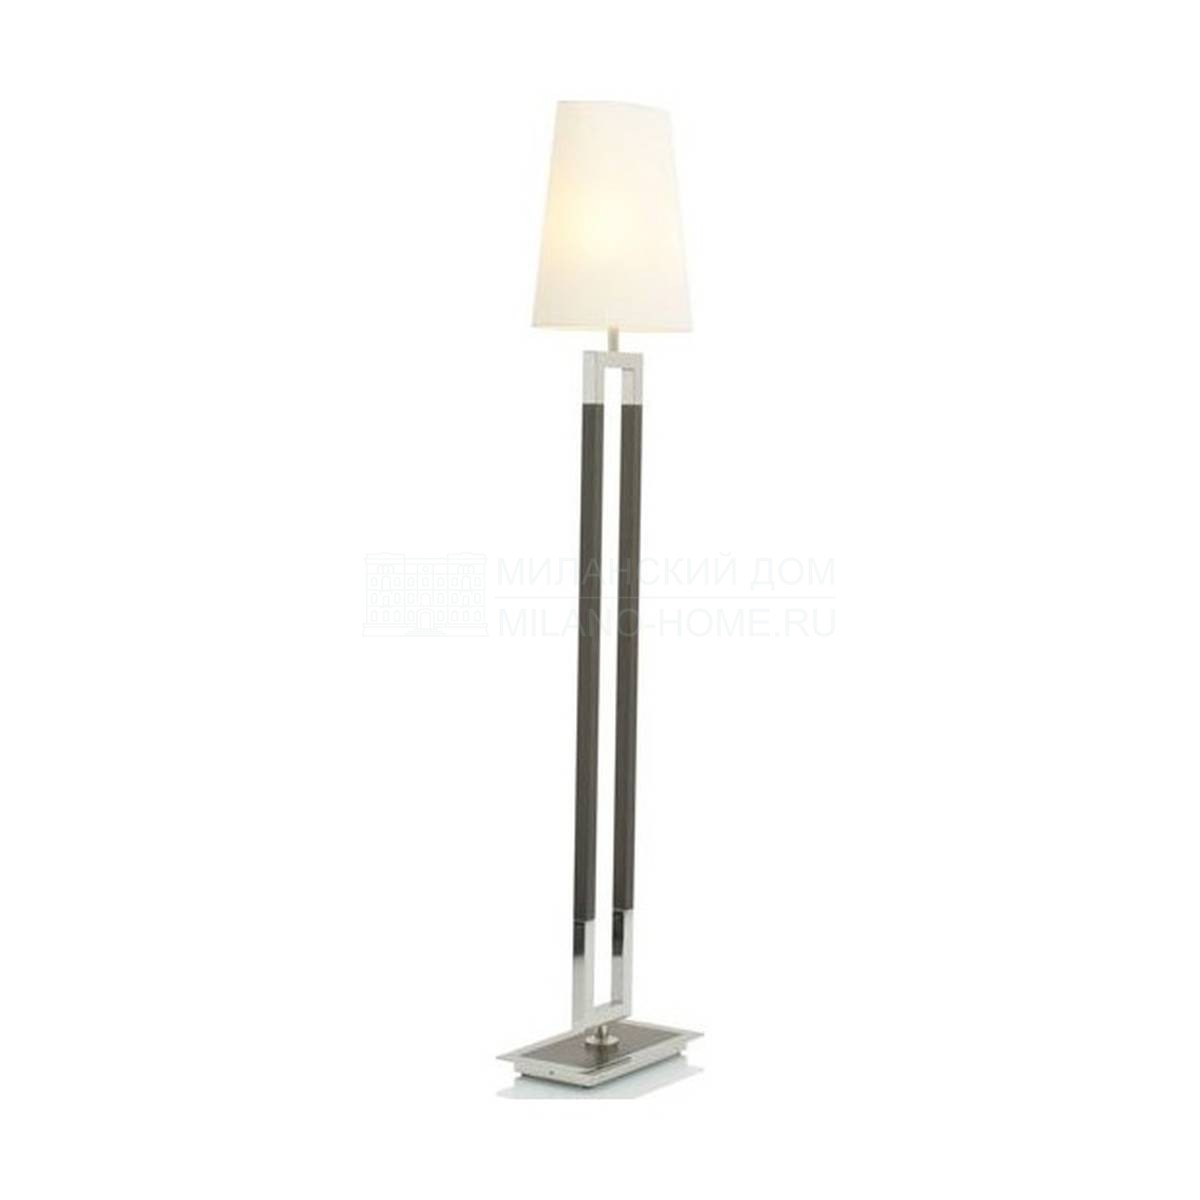 Торшер Laure/floor-lamp из Бельгии фабрики JNL 